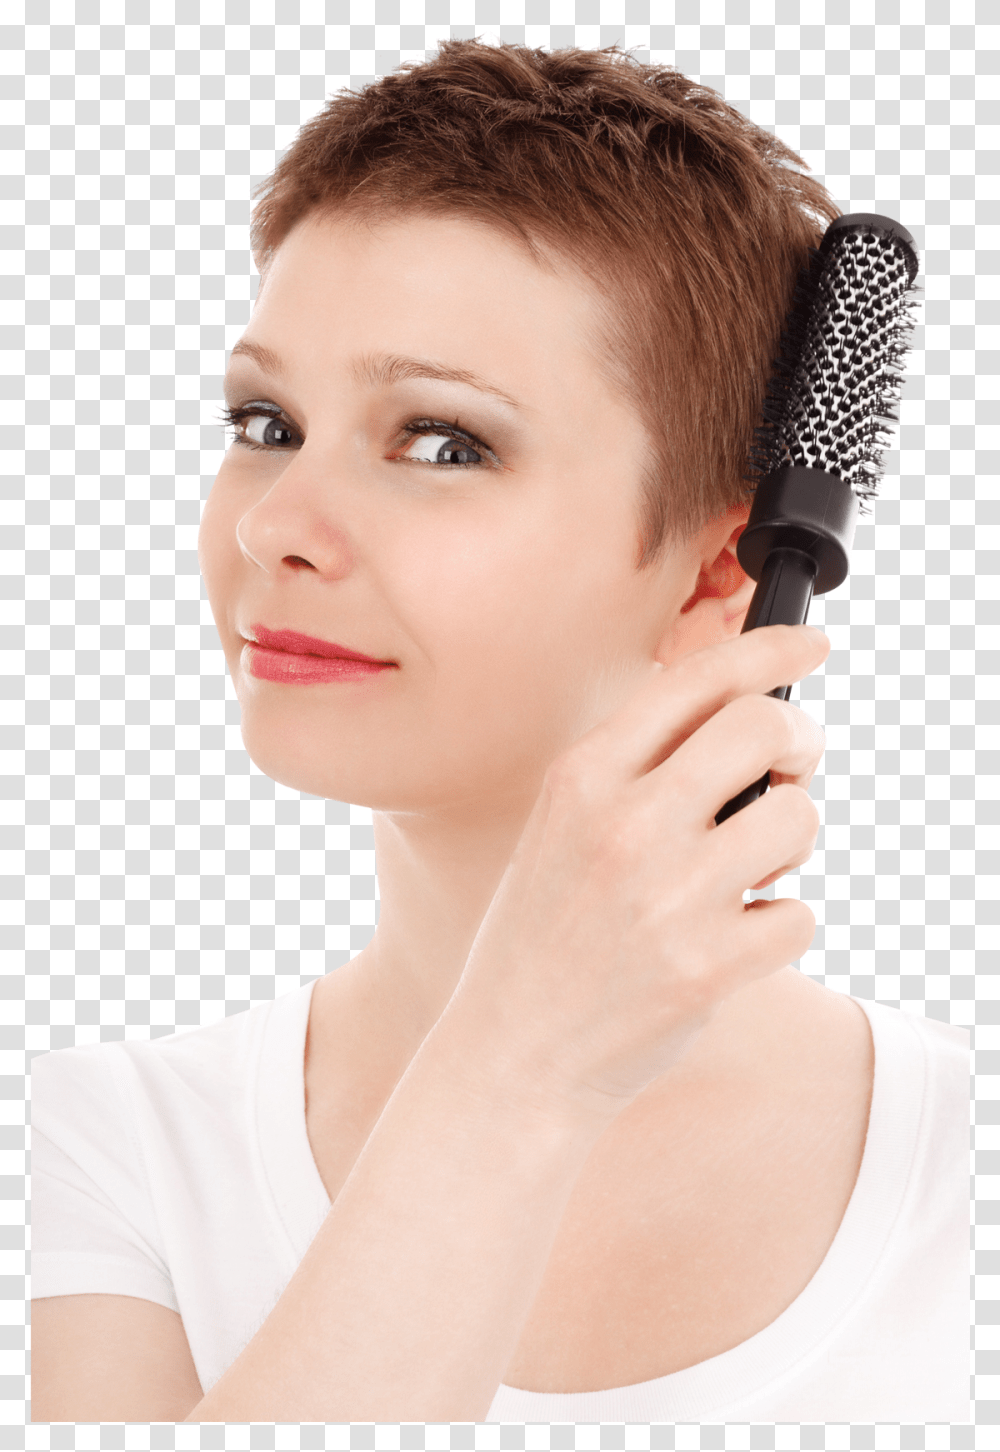 Woman Combing Her Hair Image Pngpix Girl Brushing Her Hair, Person, Human, Skin, Electronics Transparent Png